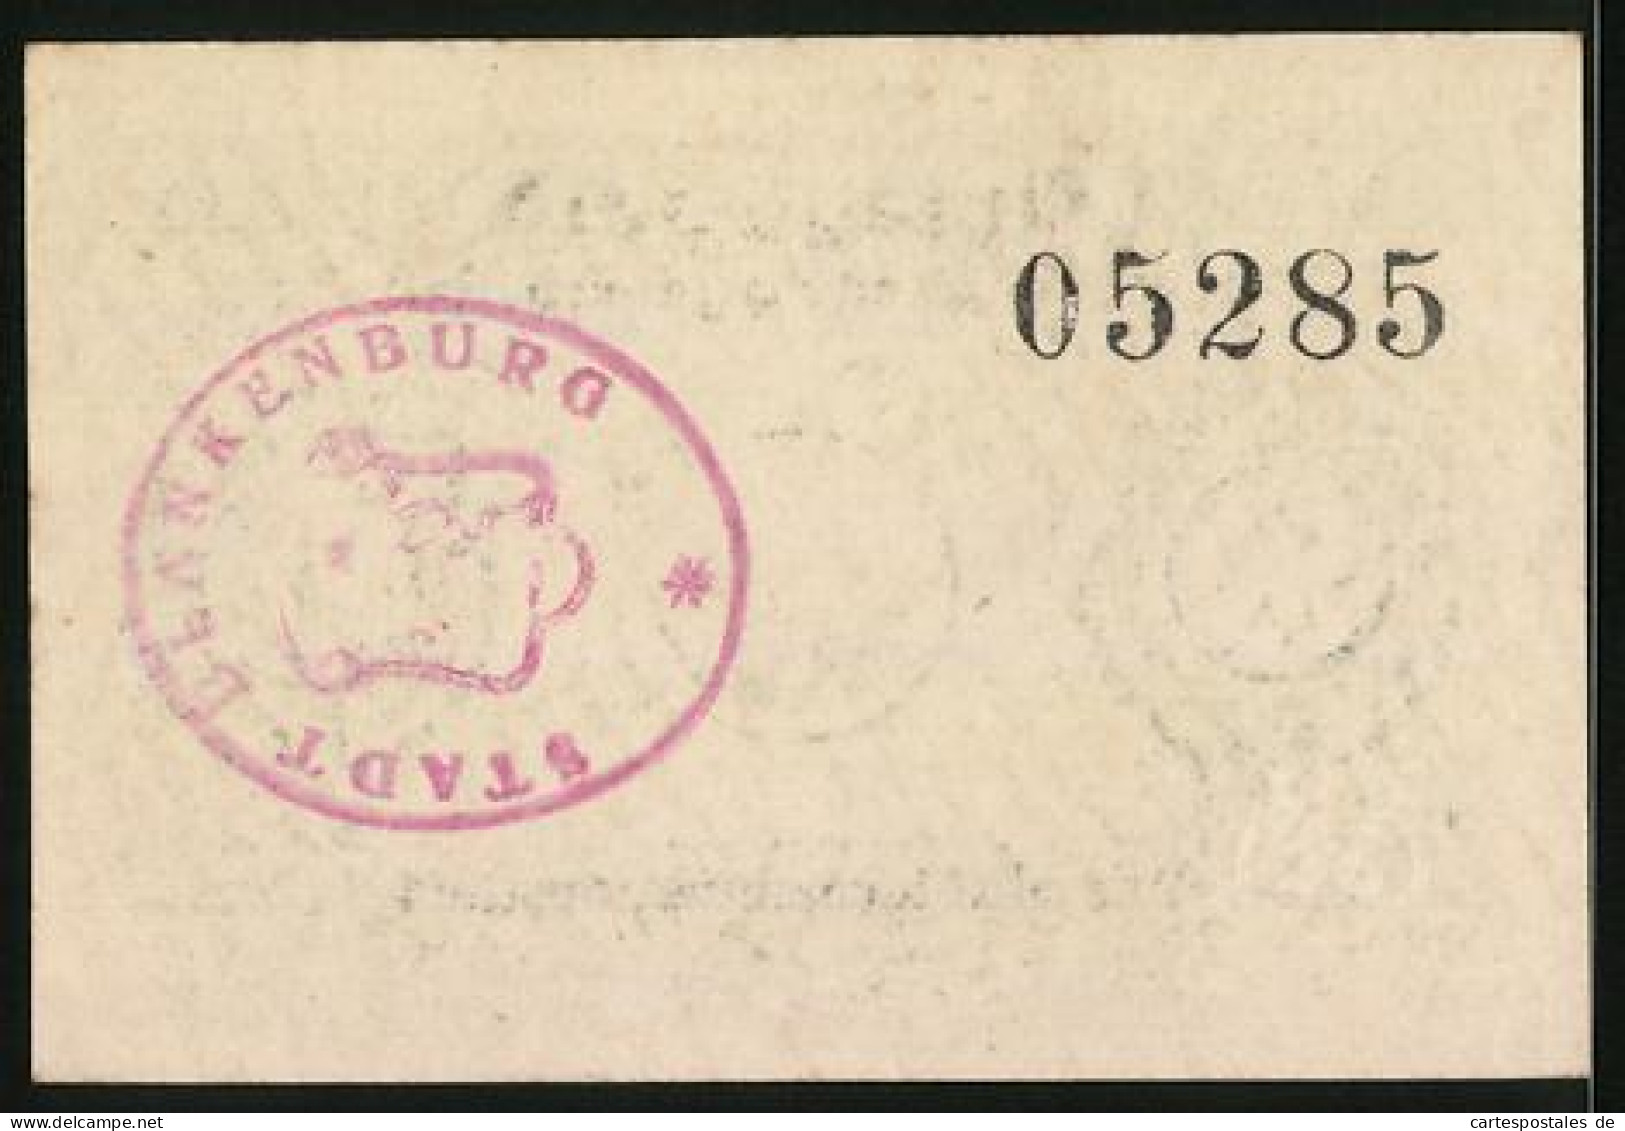 Notgeld Bad Blankenburg /Thüringerw. 1918, Burg Auf Dem Berg  - [11] Local Banknote Issues